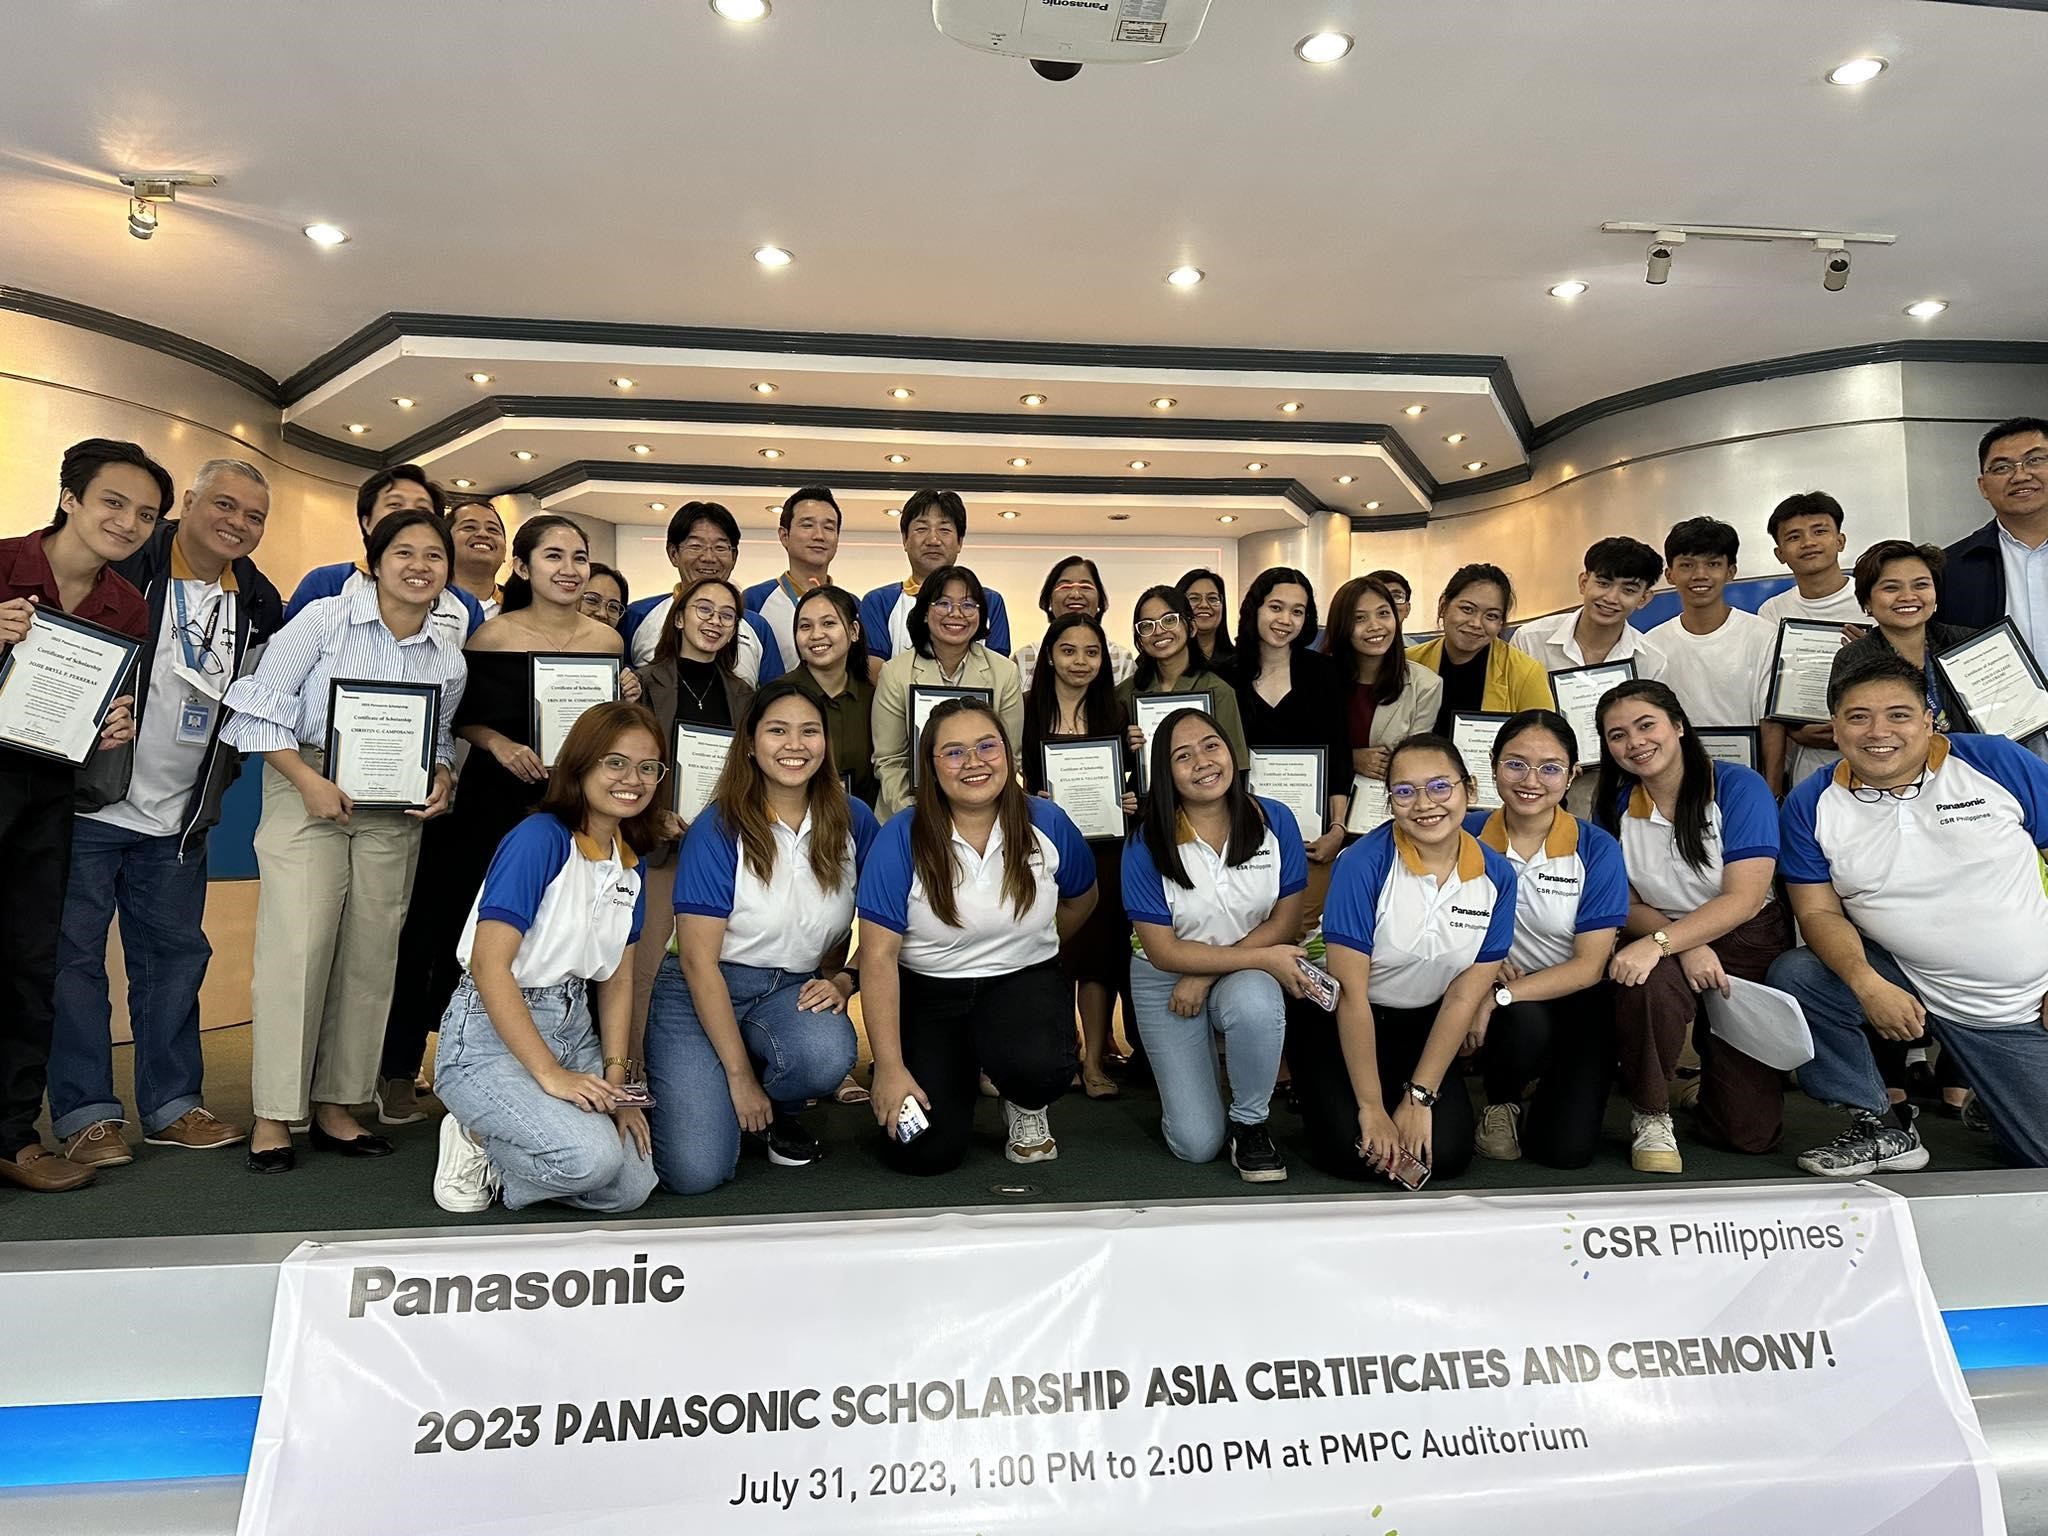 Panasonic Scholarship Asia: Awarding Ceremony